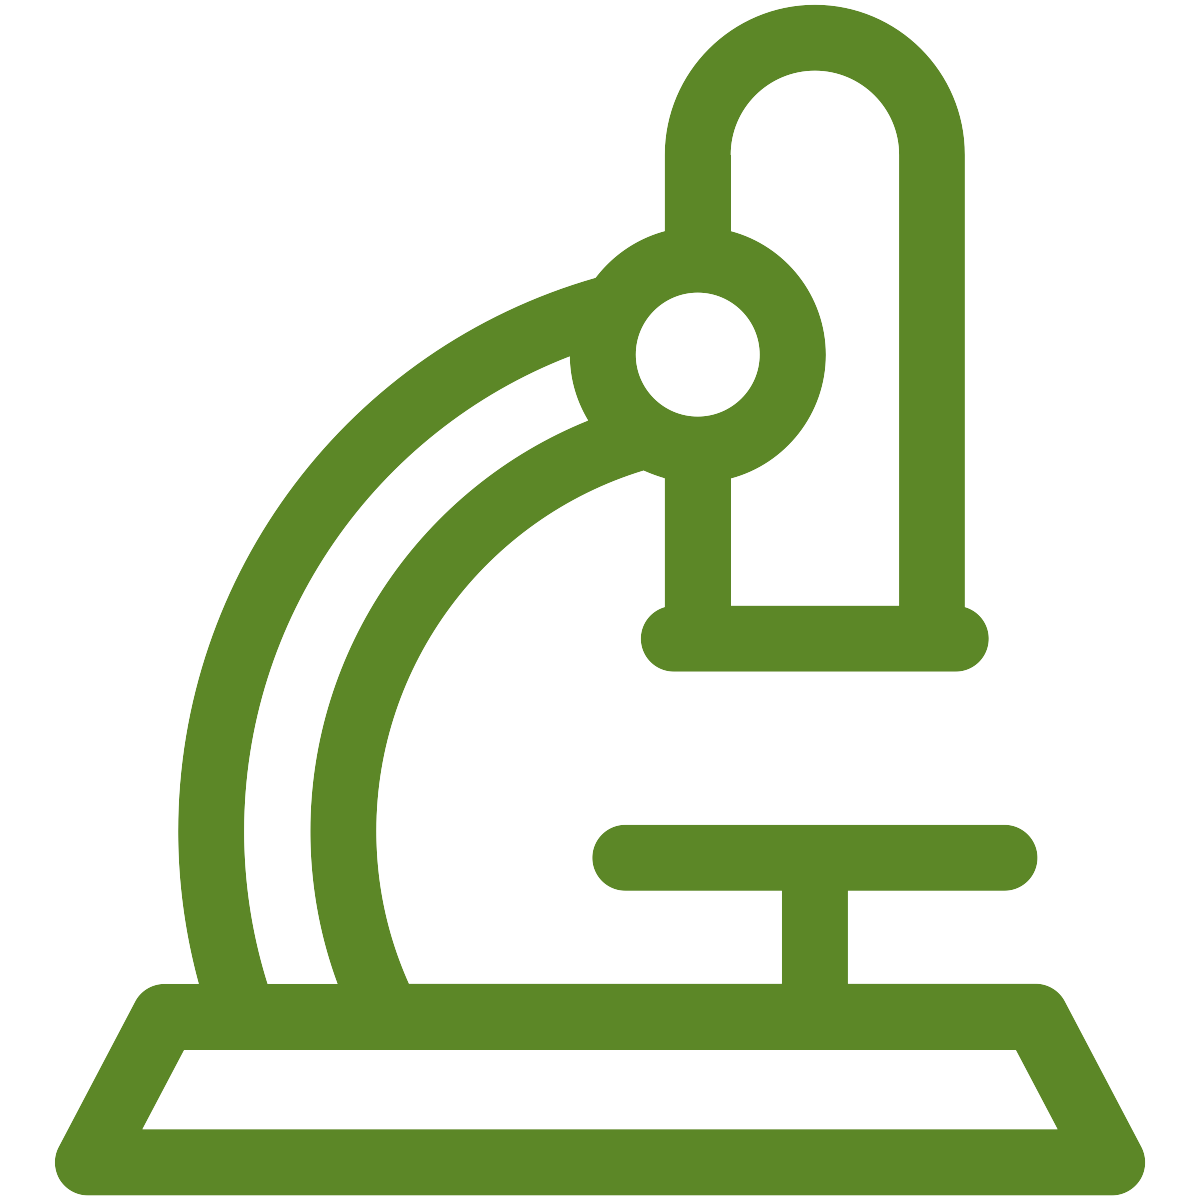 microscope icon in green